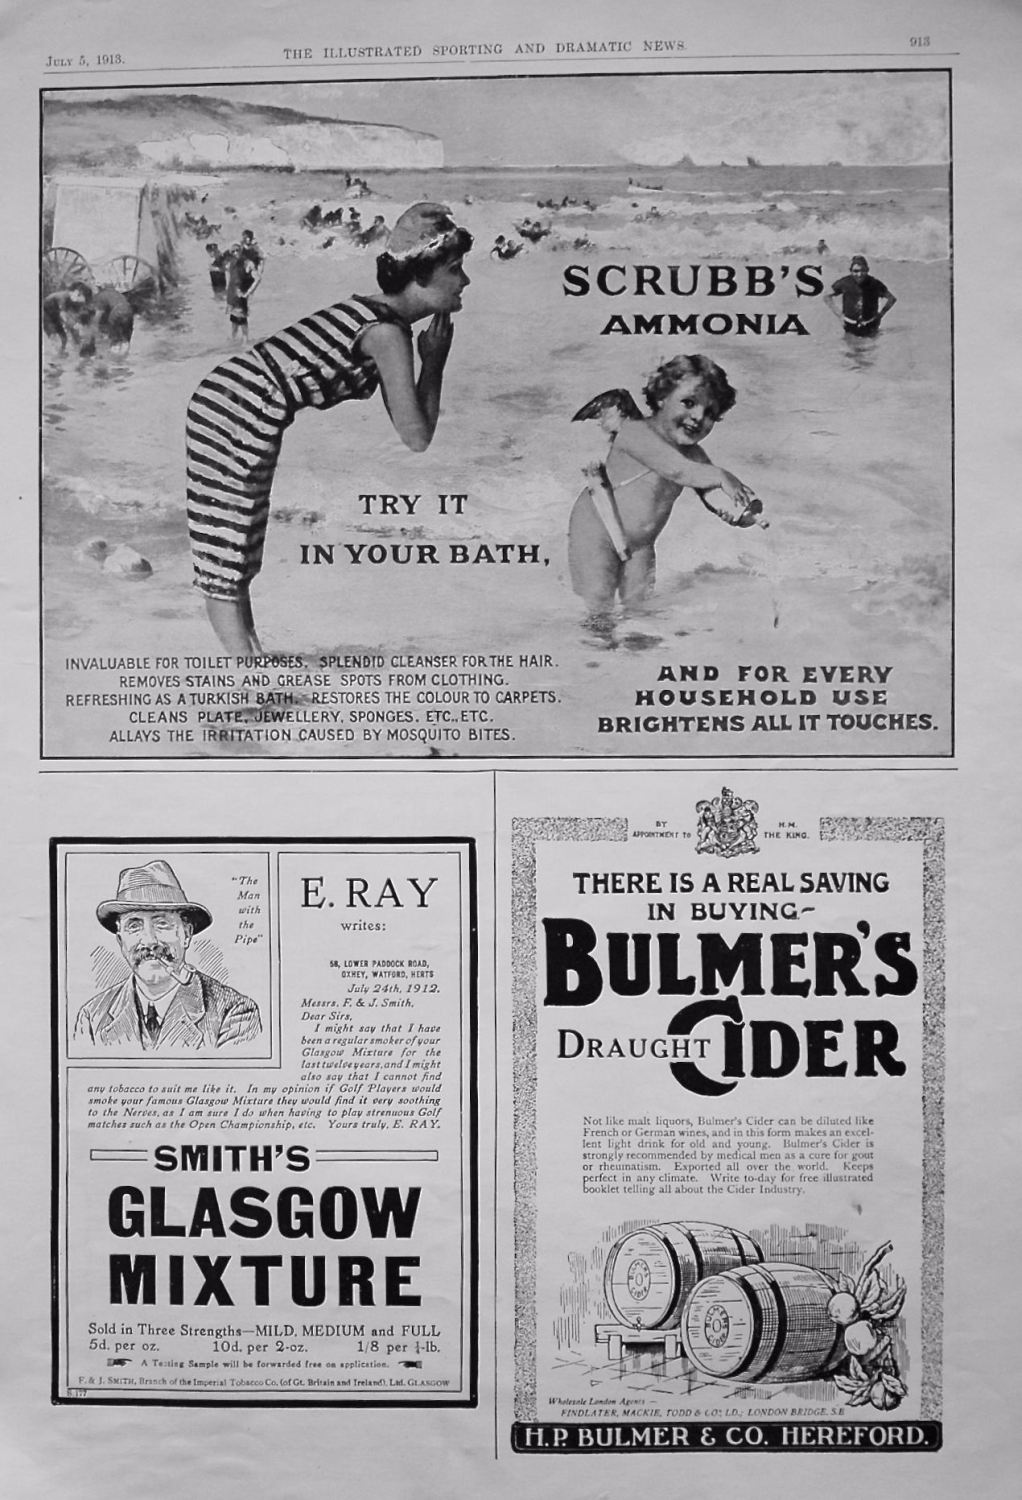 Scrubb's Ammonia, Smith's Glasgow Mixture Tobacco, and Bulmer's Cider. 1913